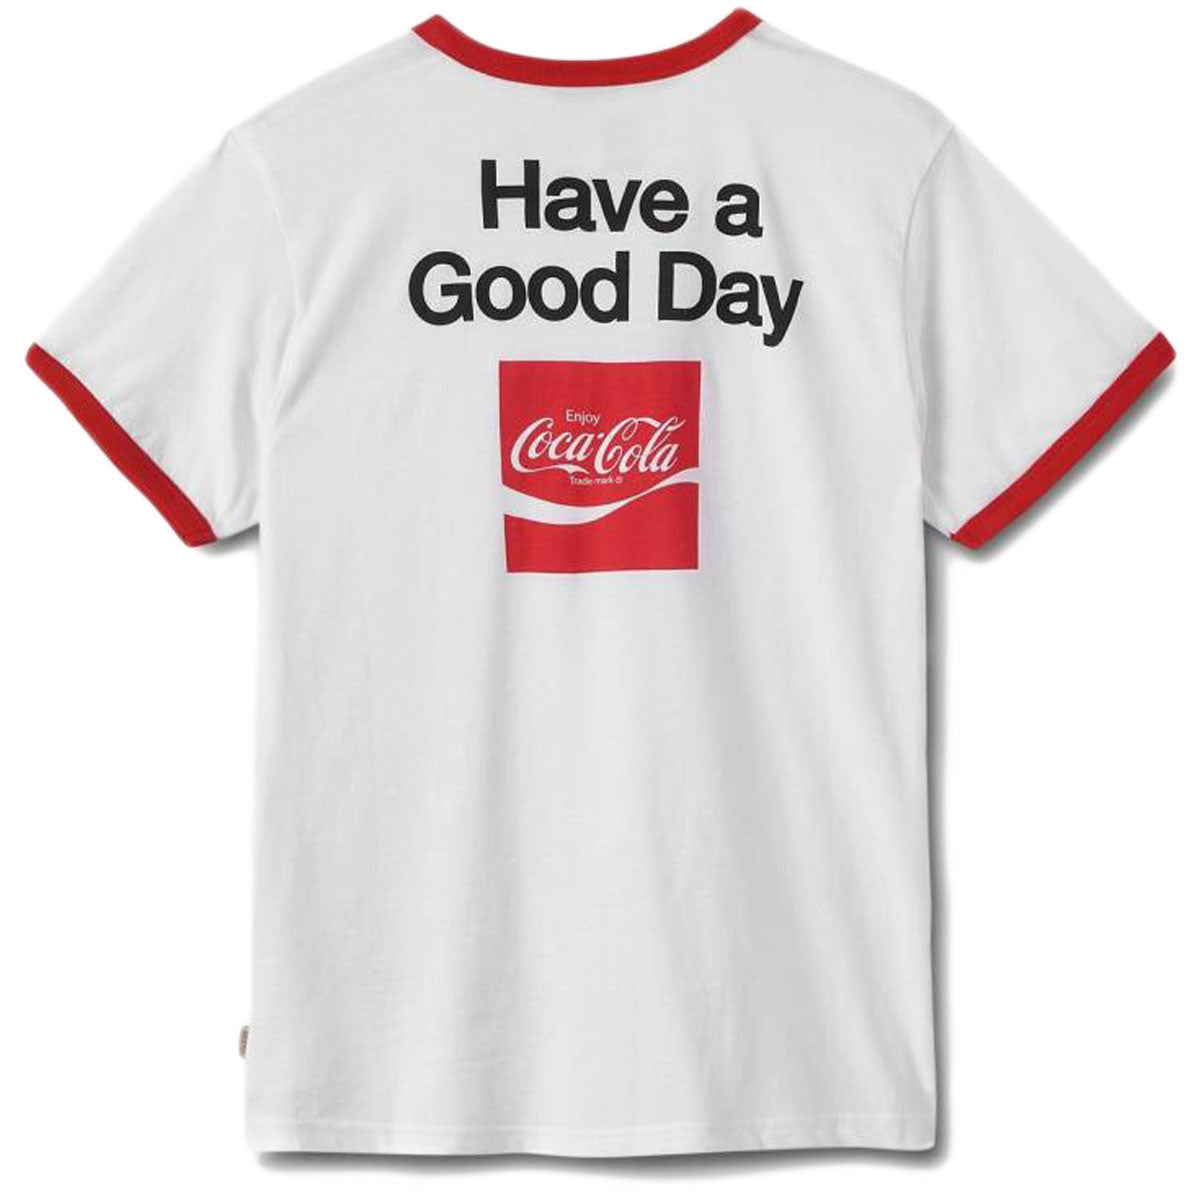 Brixton x Coca-Cola Womens Good Day Ringer T-Shirt - White image 2